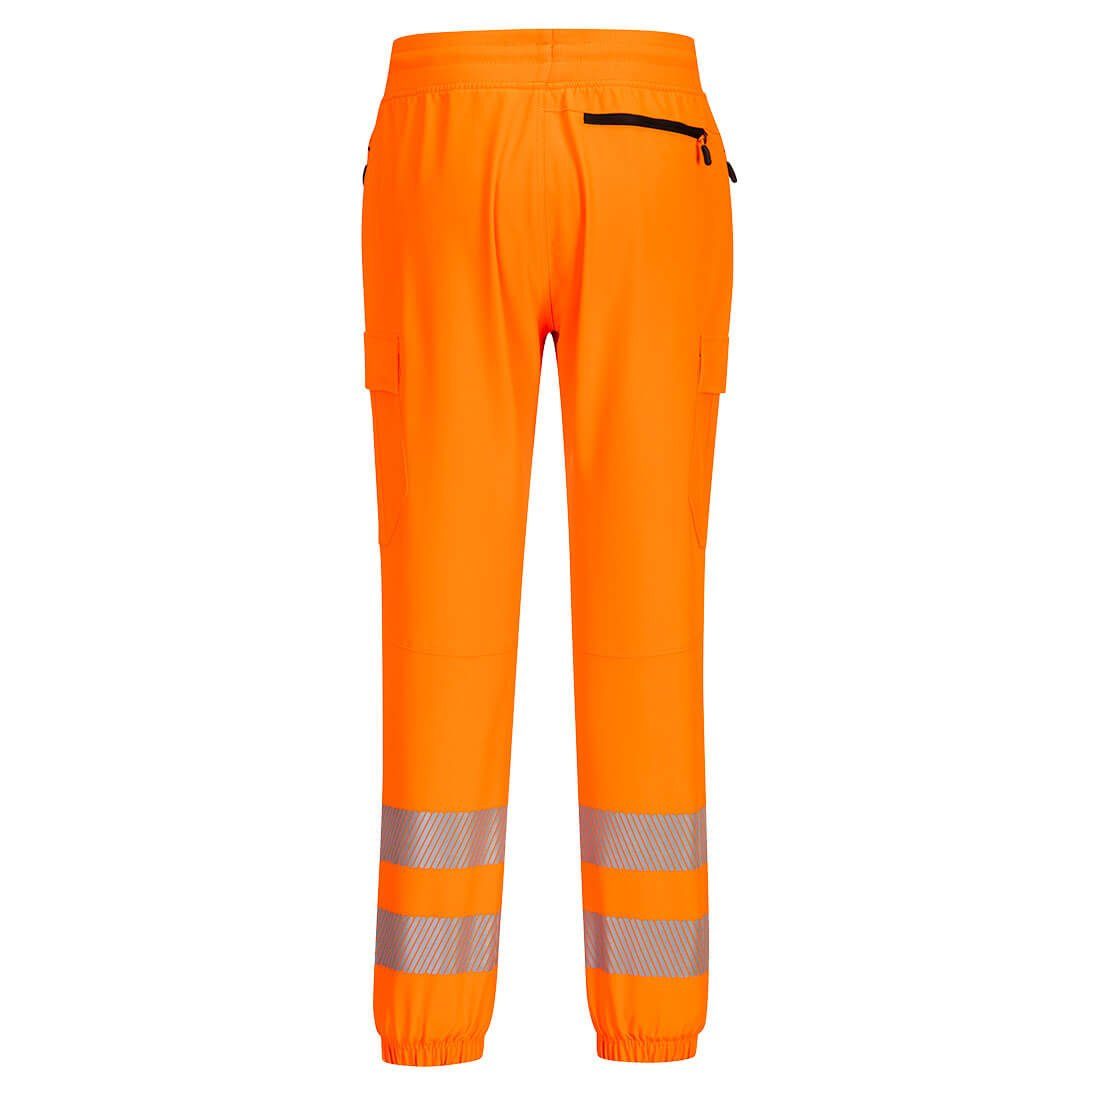 Arbeitsbundhose Orange/Schwarz Portwest KX3 Warnschutz-Klasse 2 Arbeitsbundhose Flexi-Jogger